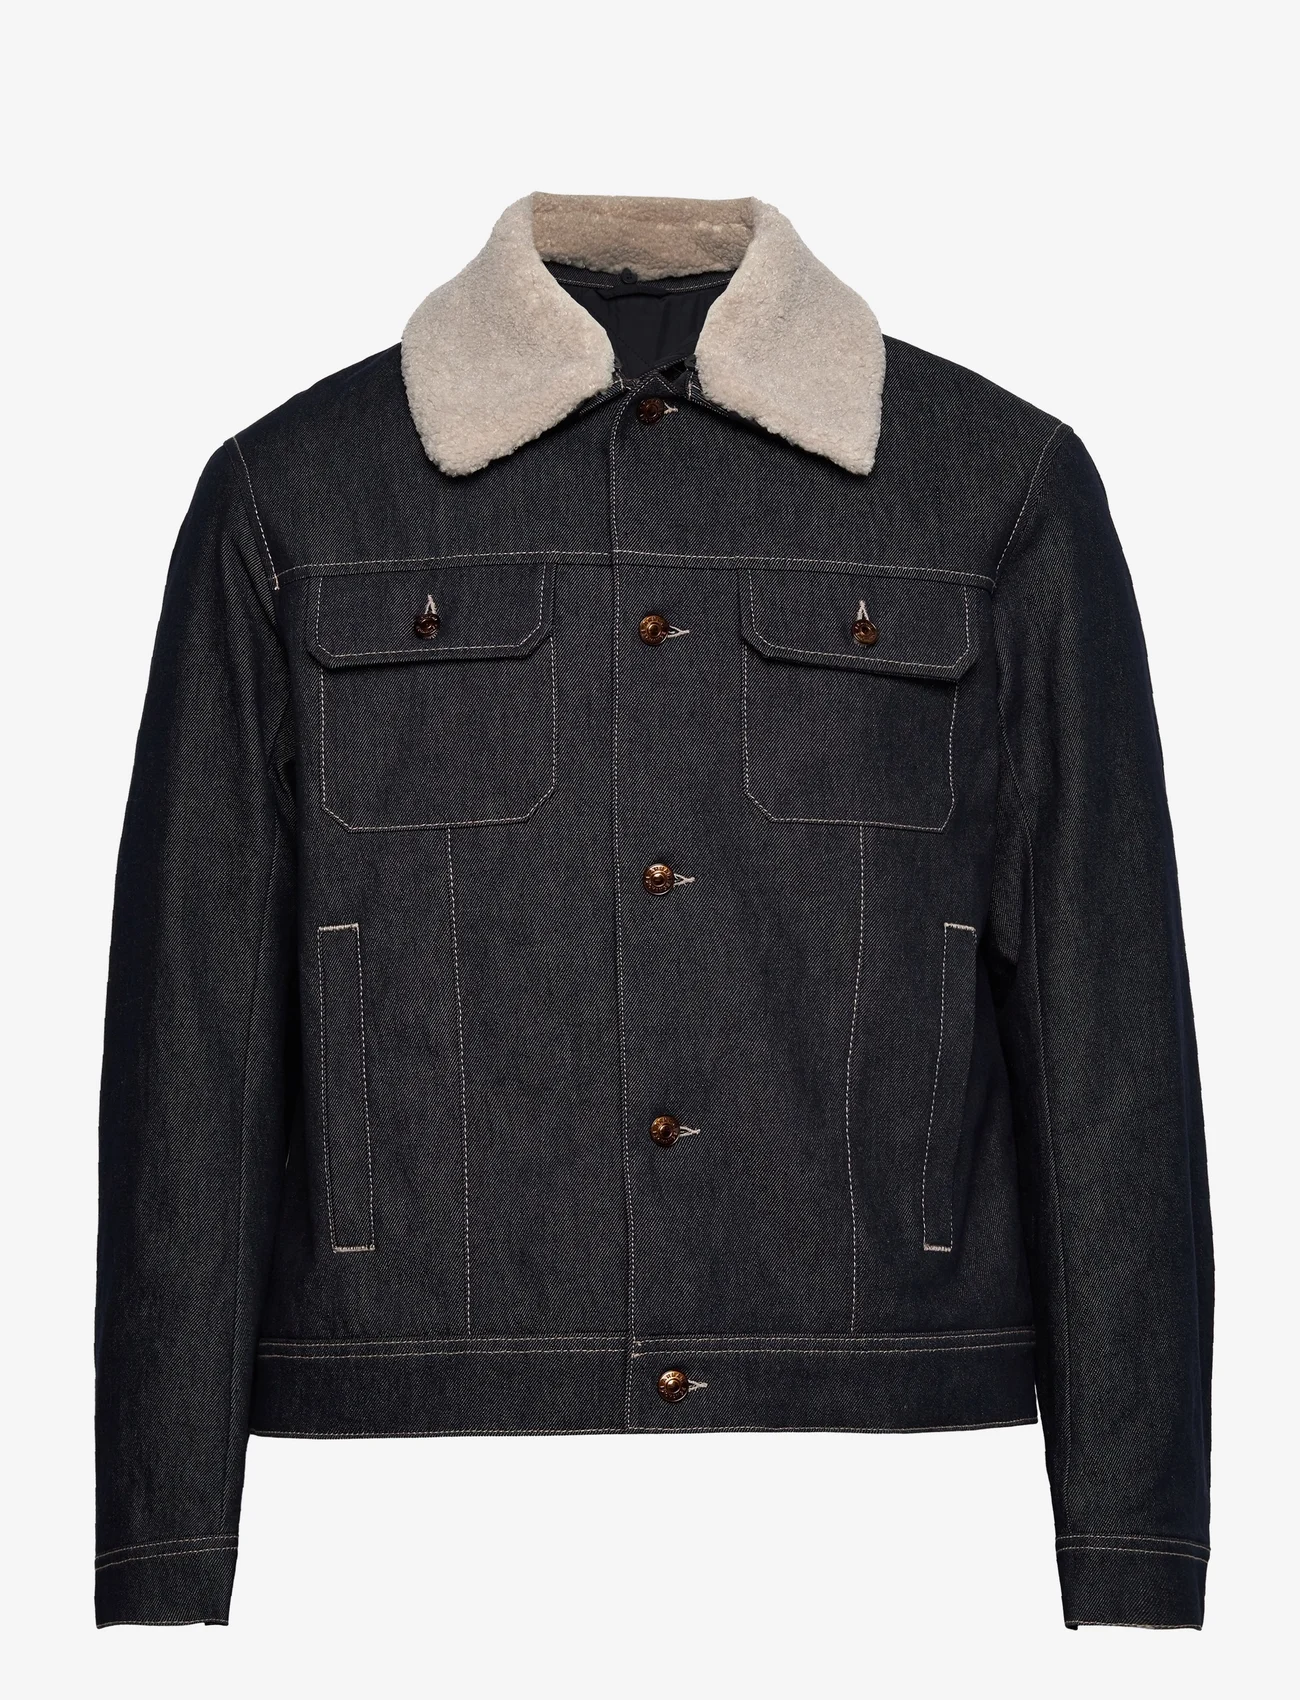 Armani Exchange - JACKETS - spring jackets - 1500-indigo denim - 0